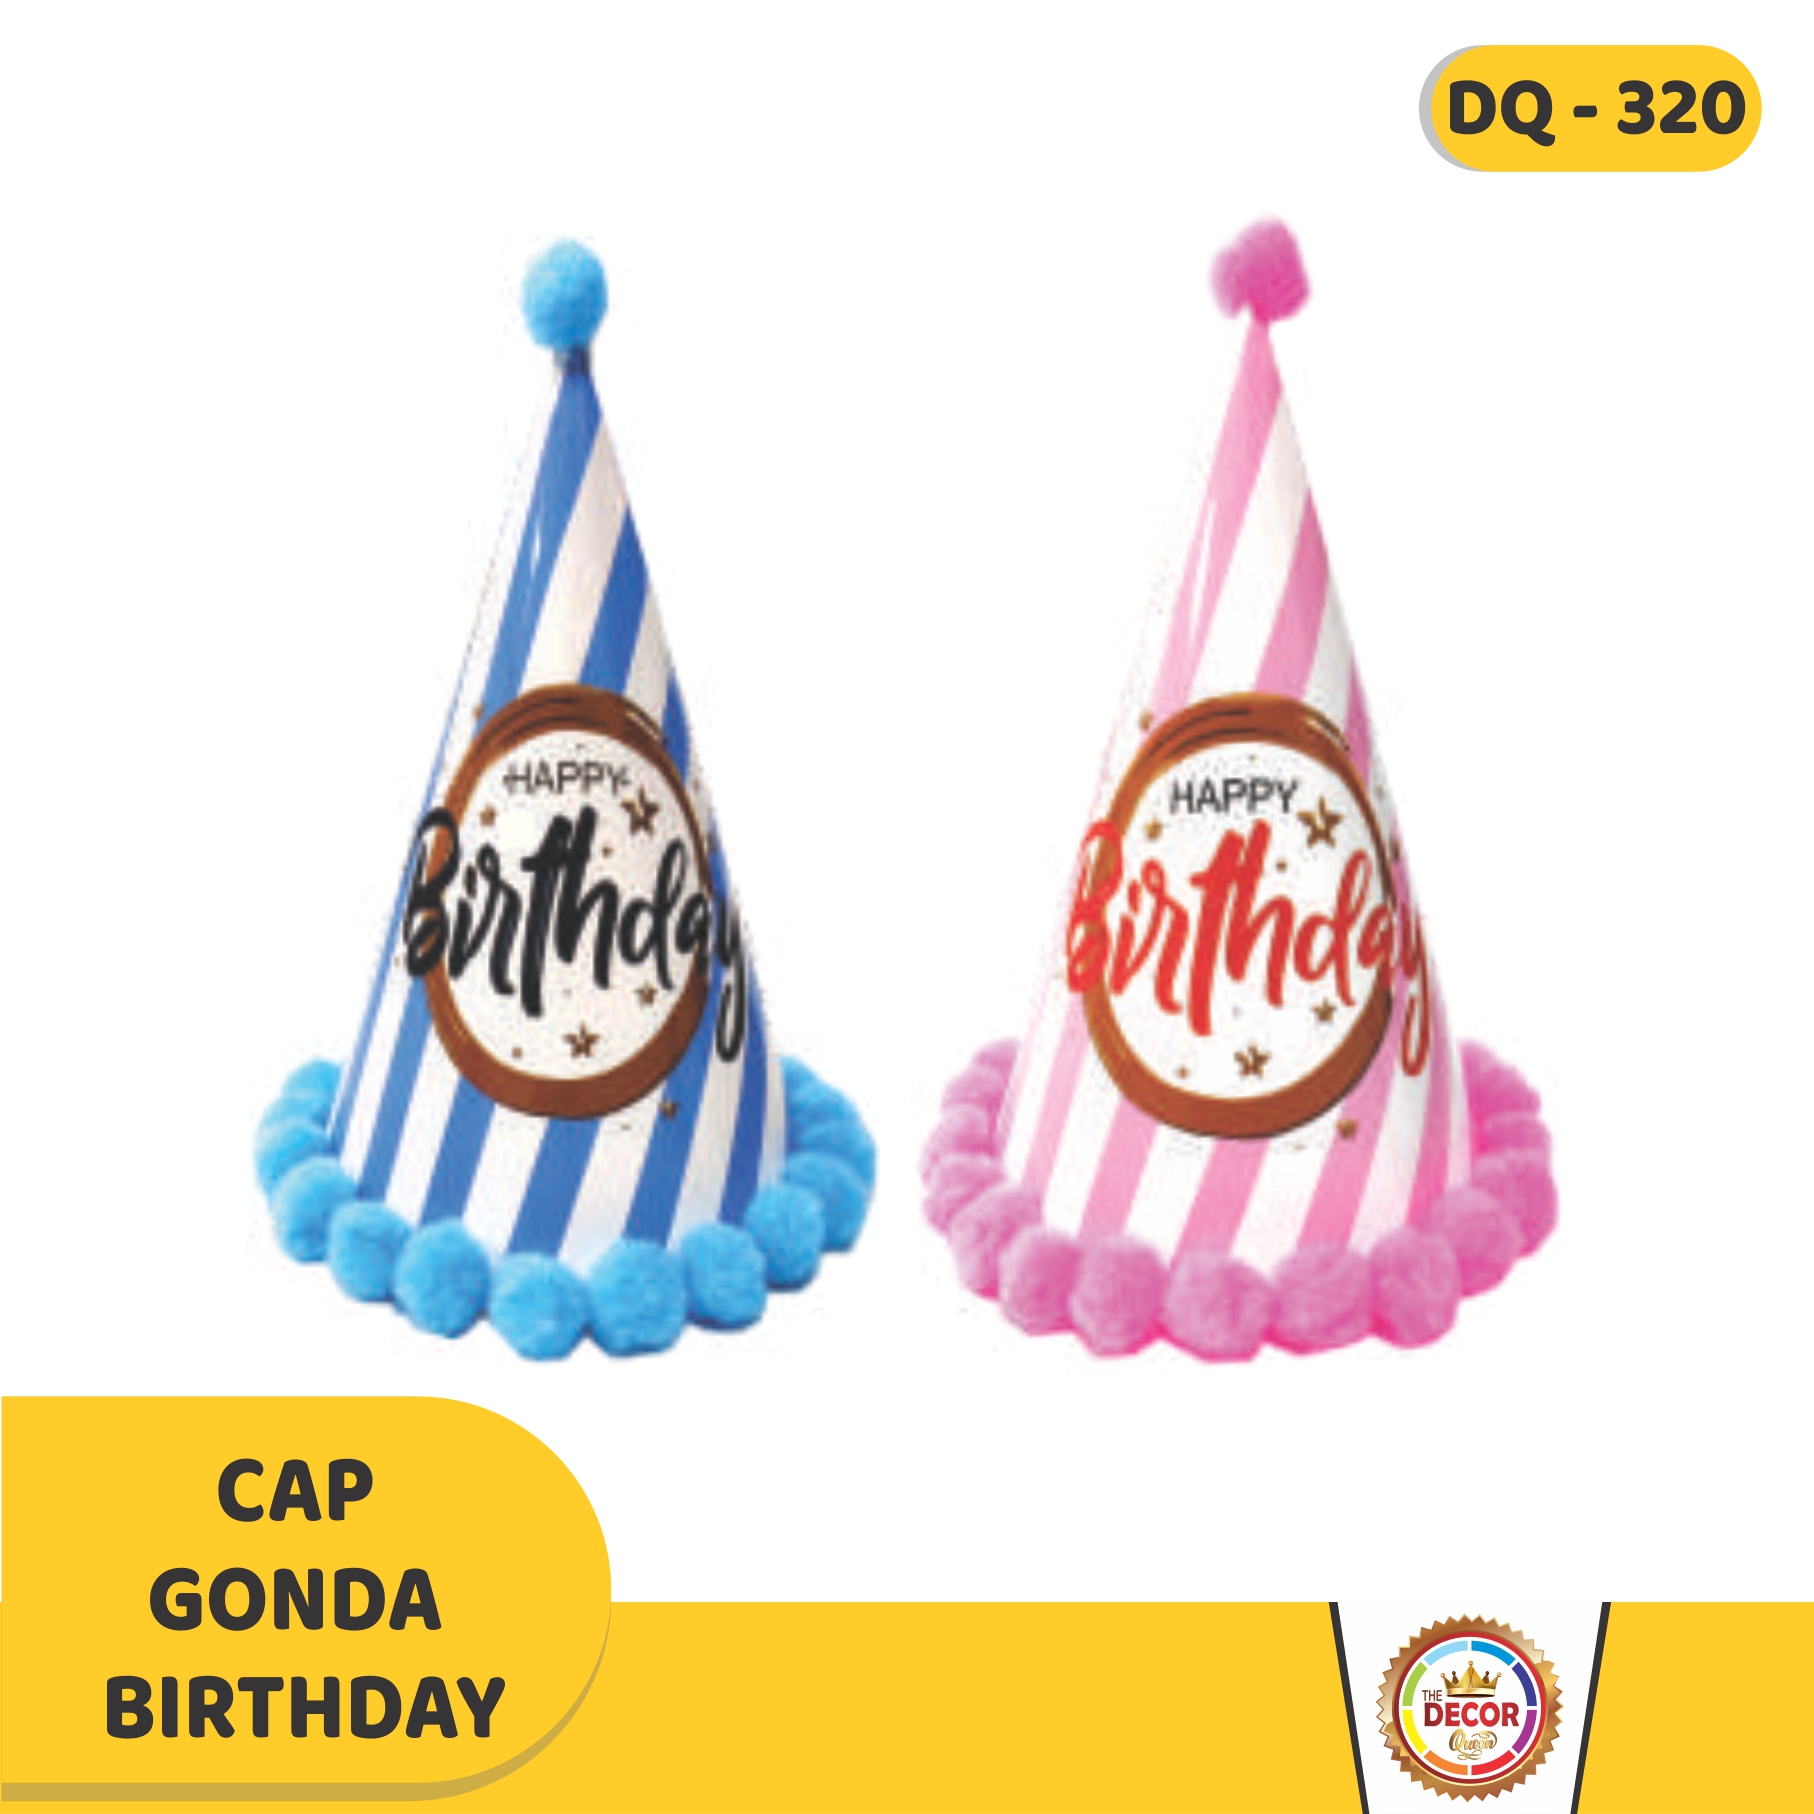 CAP GONDA BIRTHDAY|Party Products|Cap